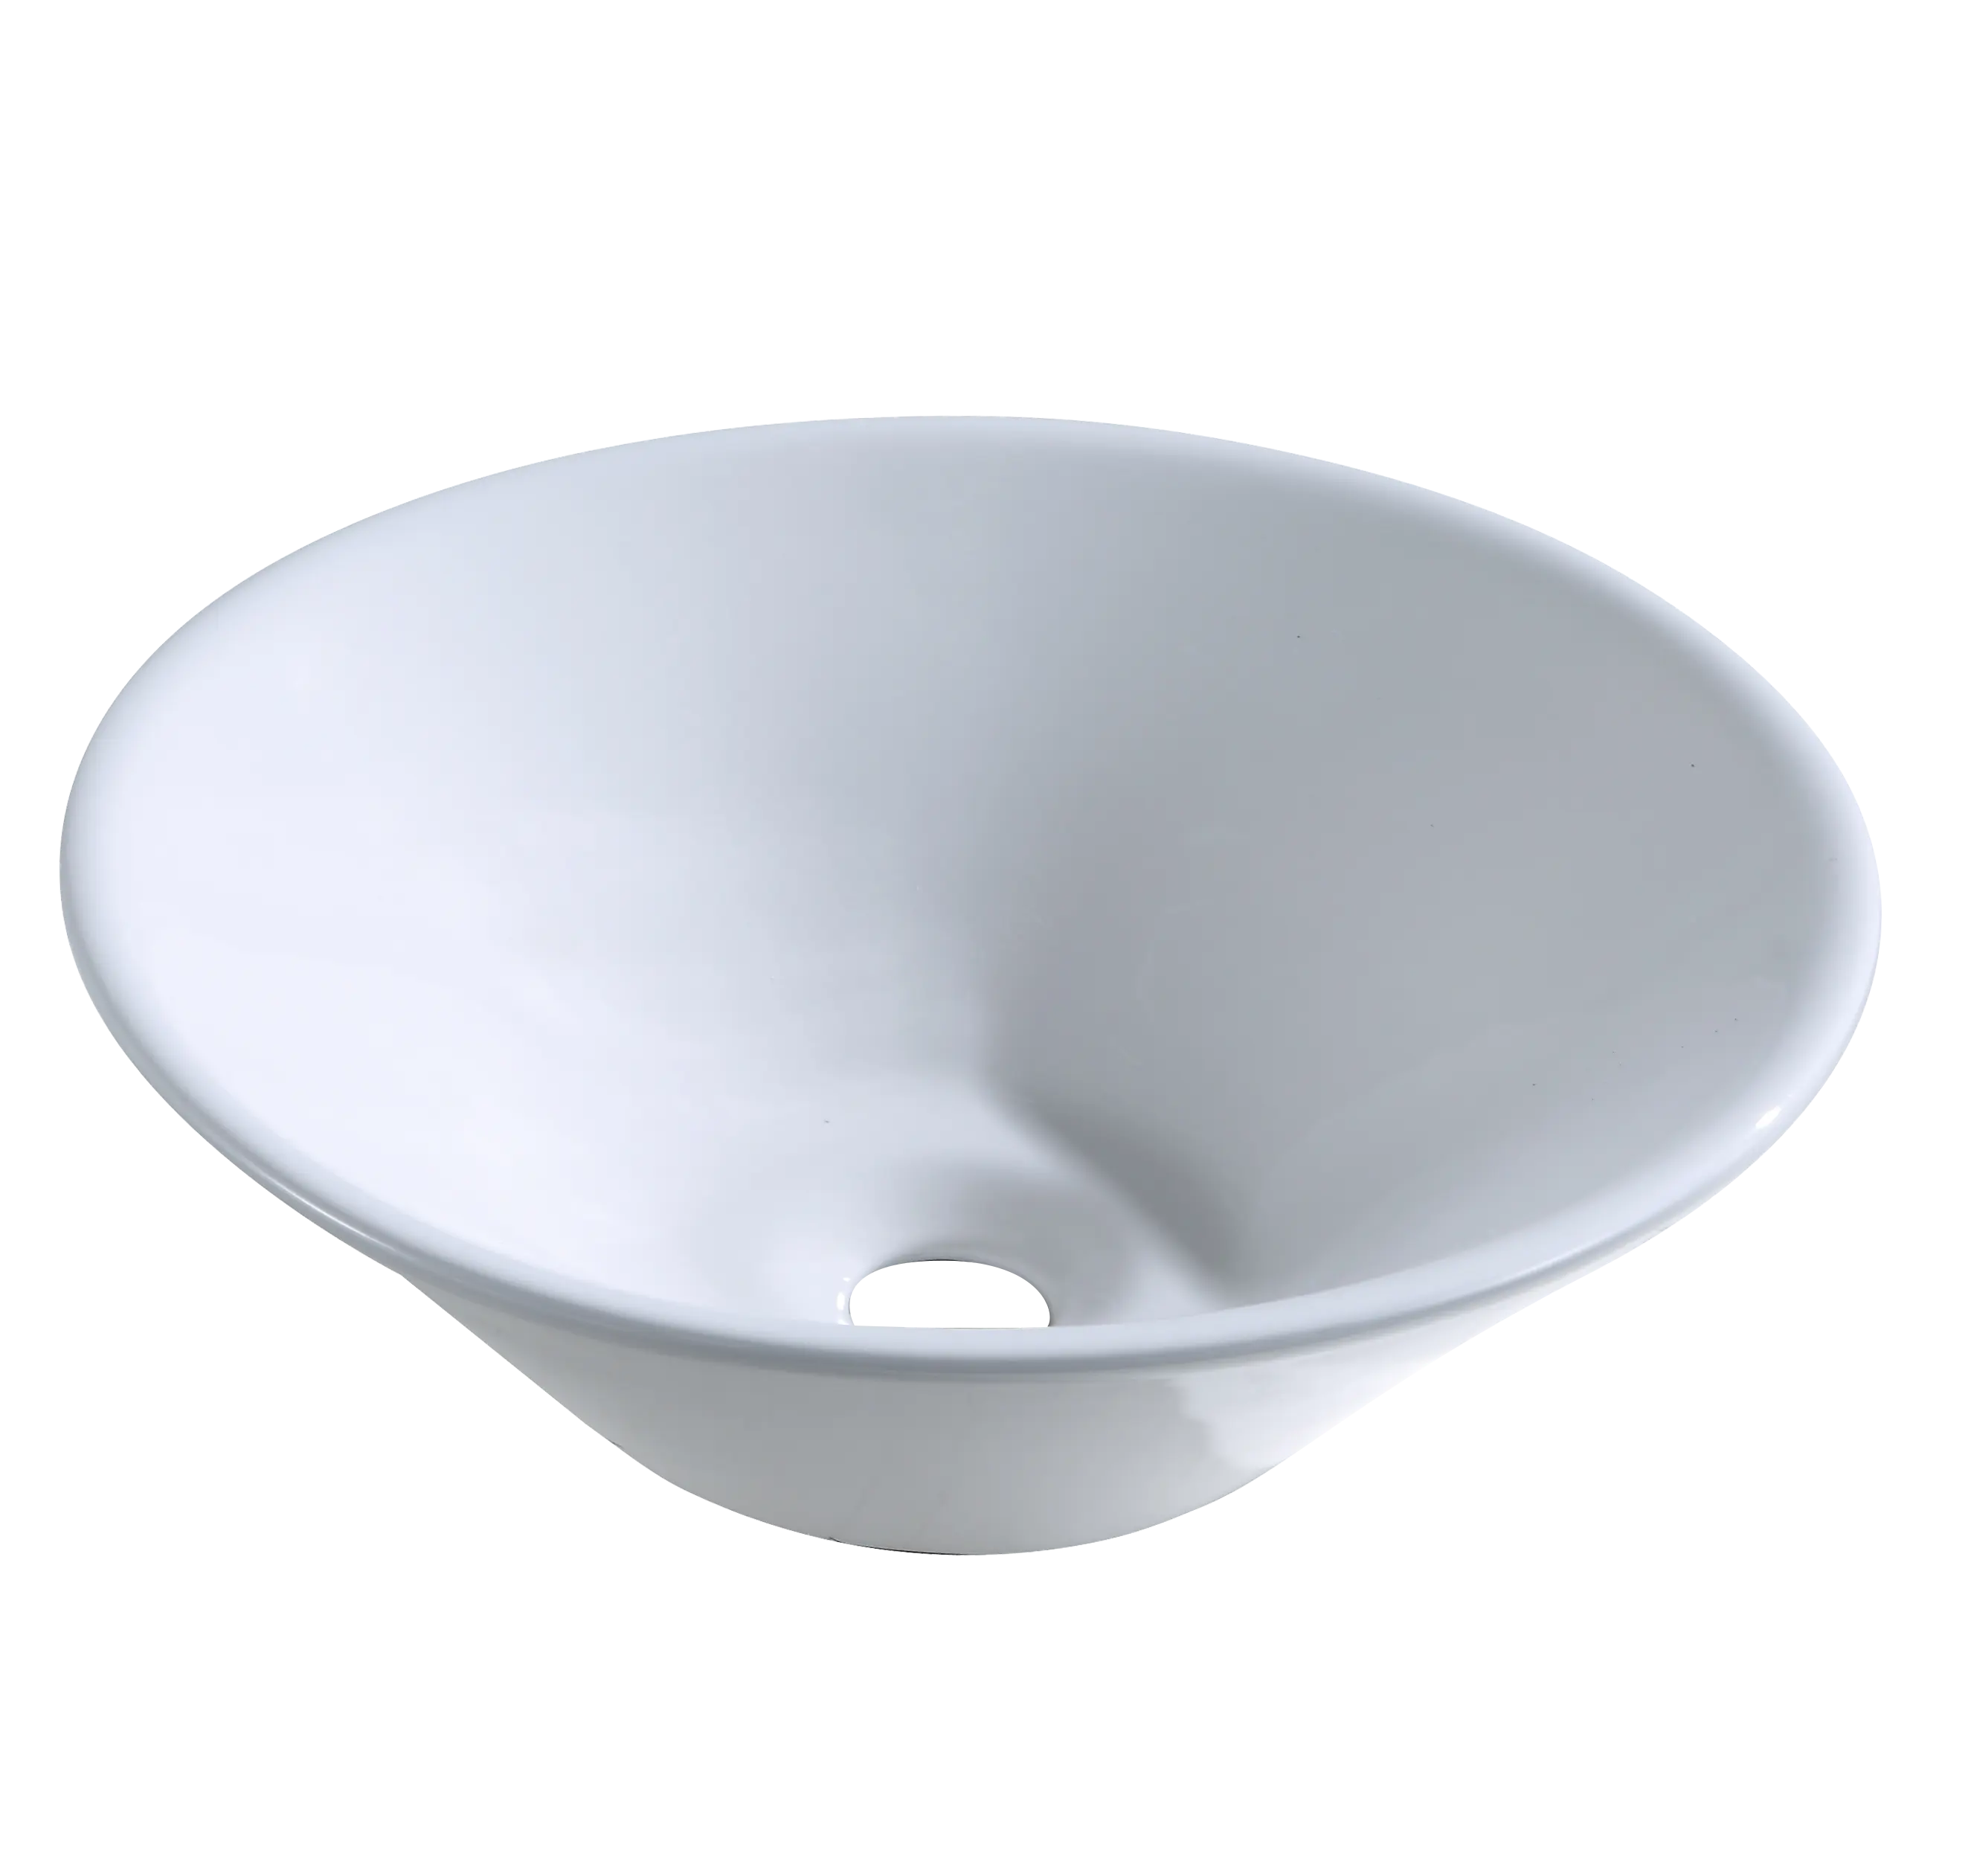 Bathroom Round Bowl Lavatory Vanity White Ceramic Art Wash Basin Bathroom Vessel Sink